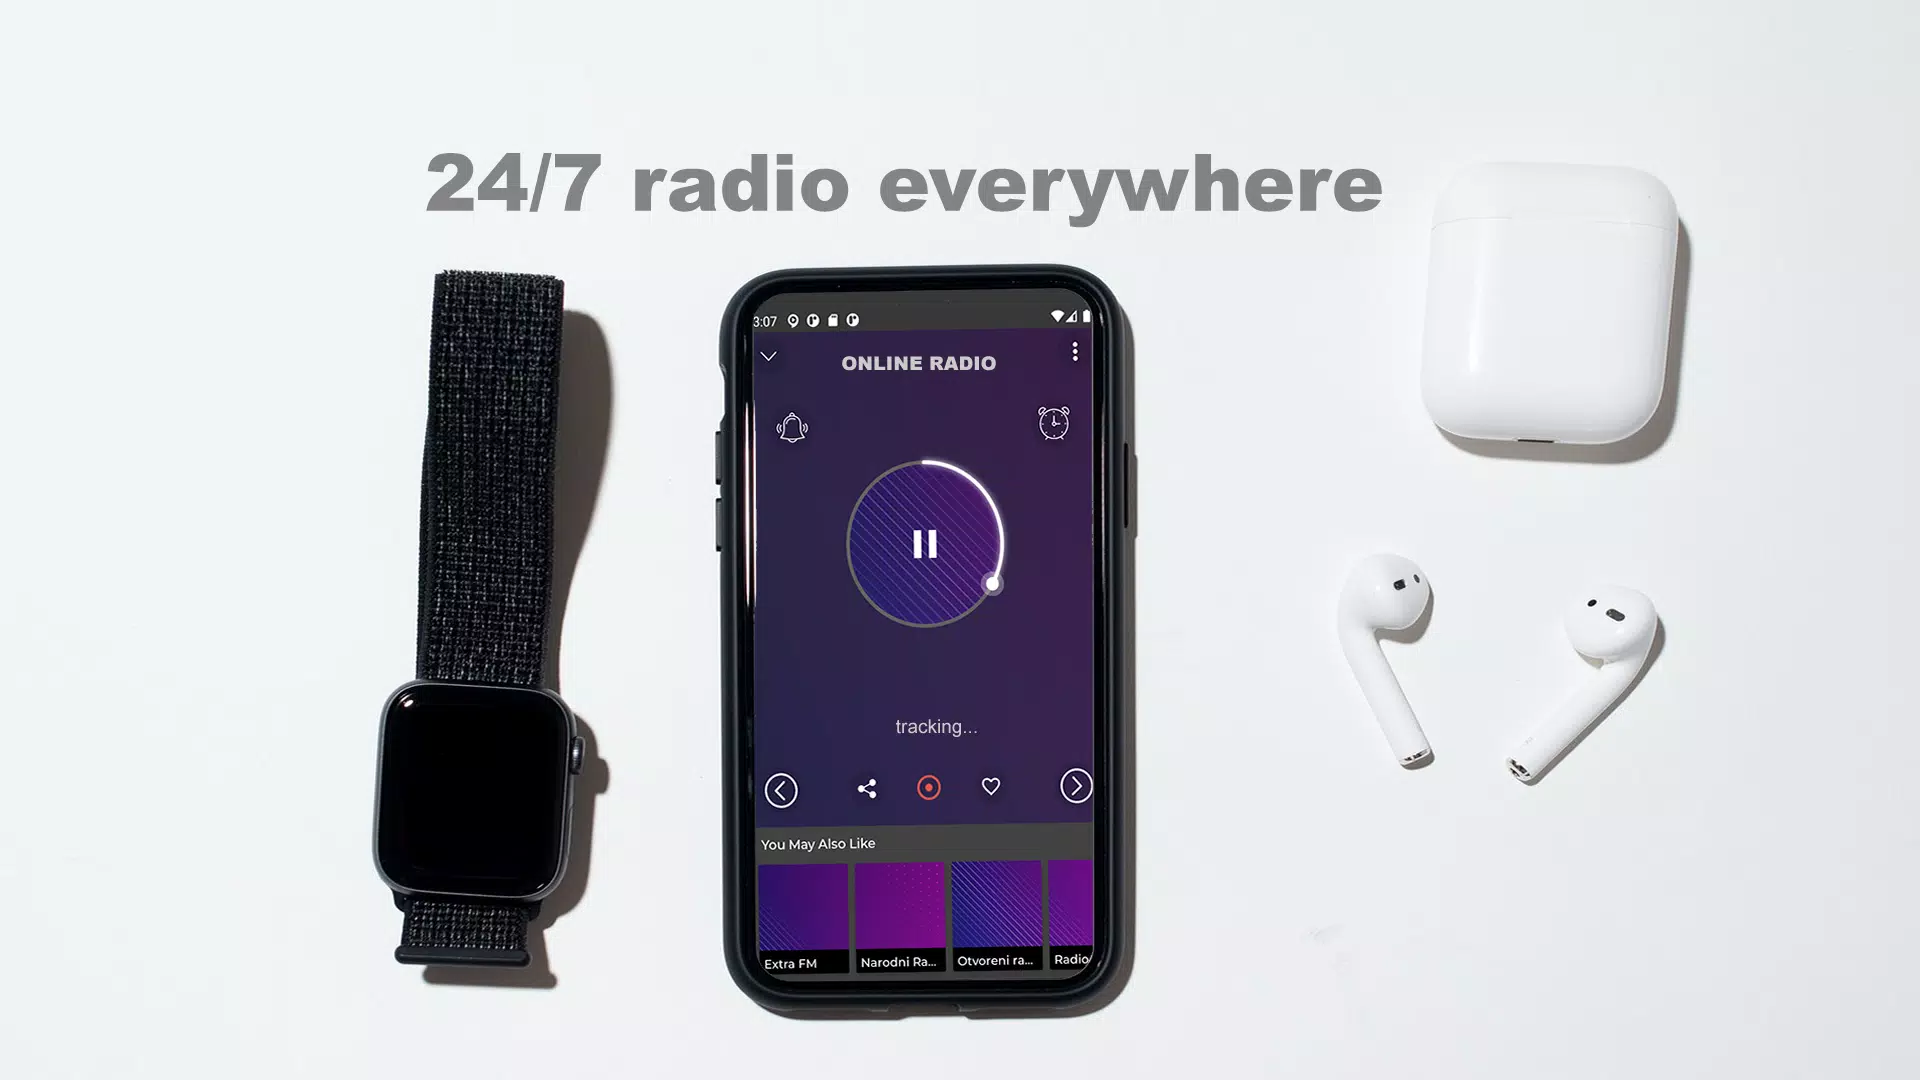 EXTRA FM Radio 93.6 Fm Zagreb Croatia for Android - APK Download